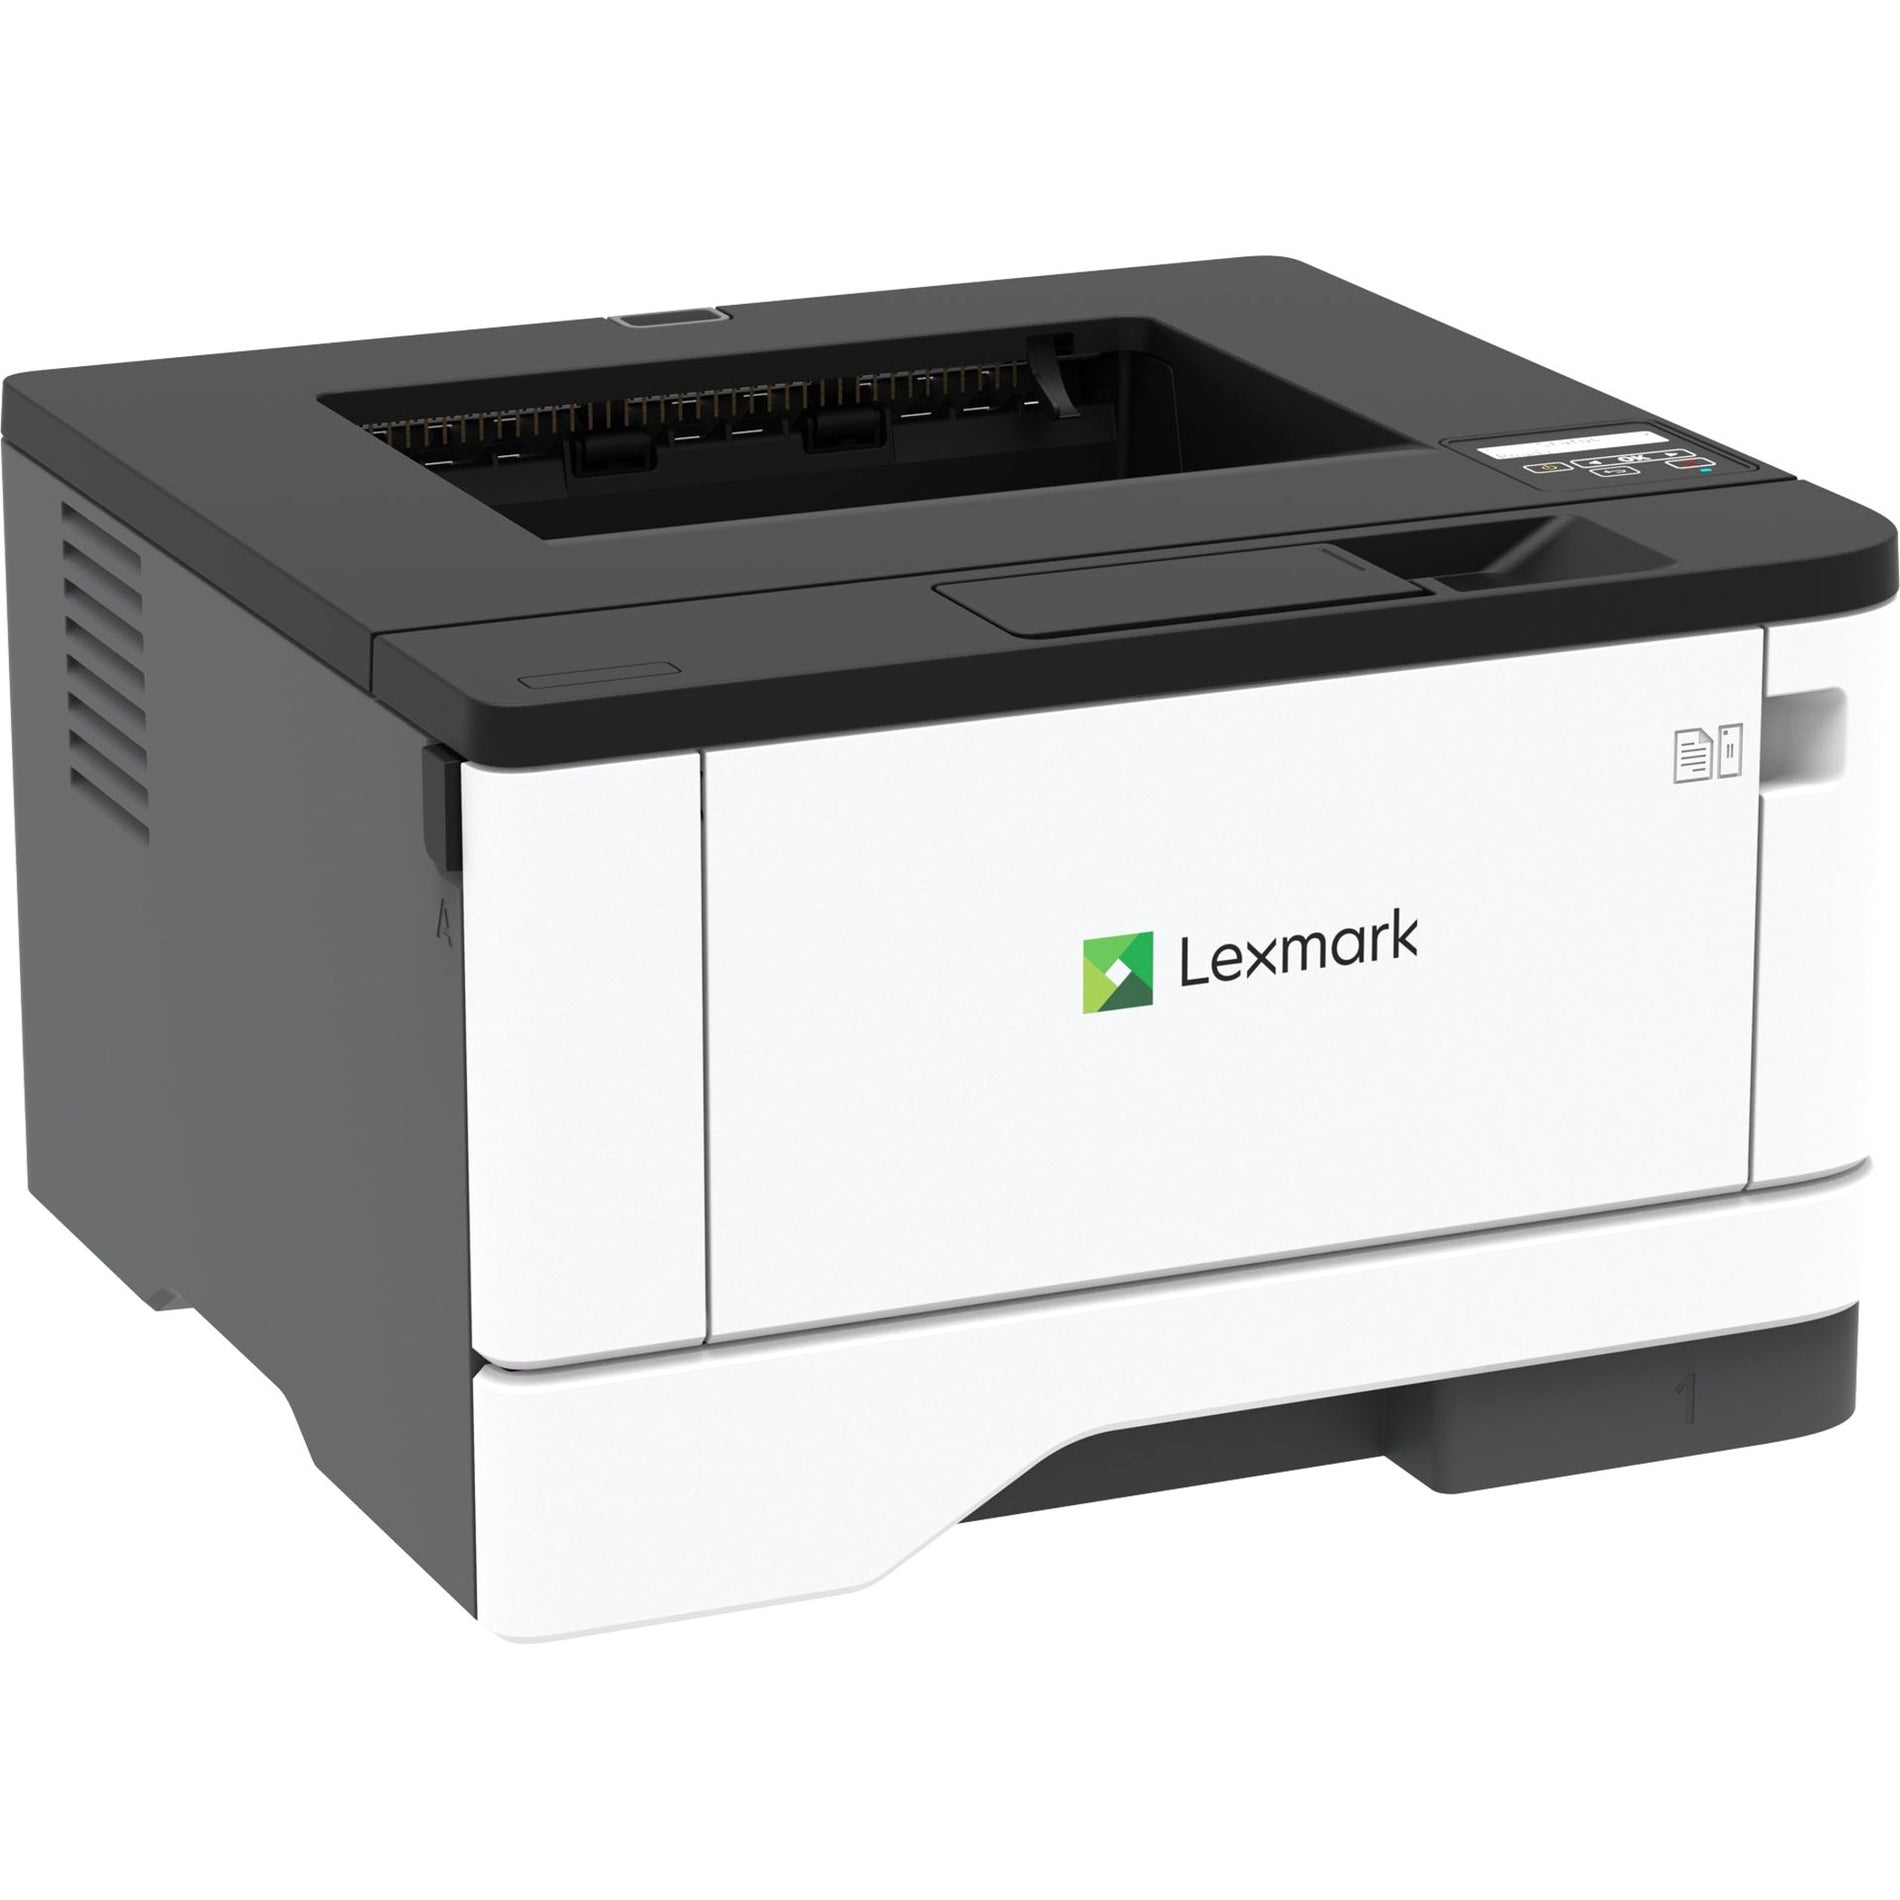 Lexmark 29ST001 MS431DN Laser Printer, Monochrome, Automatic Duplex Printing, 42 ppm, 600 x 600 dpi